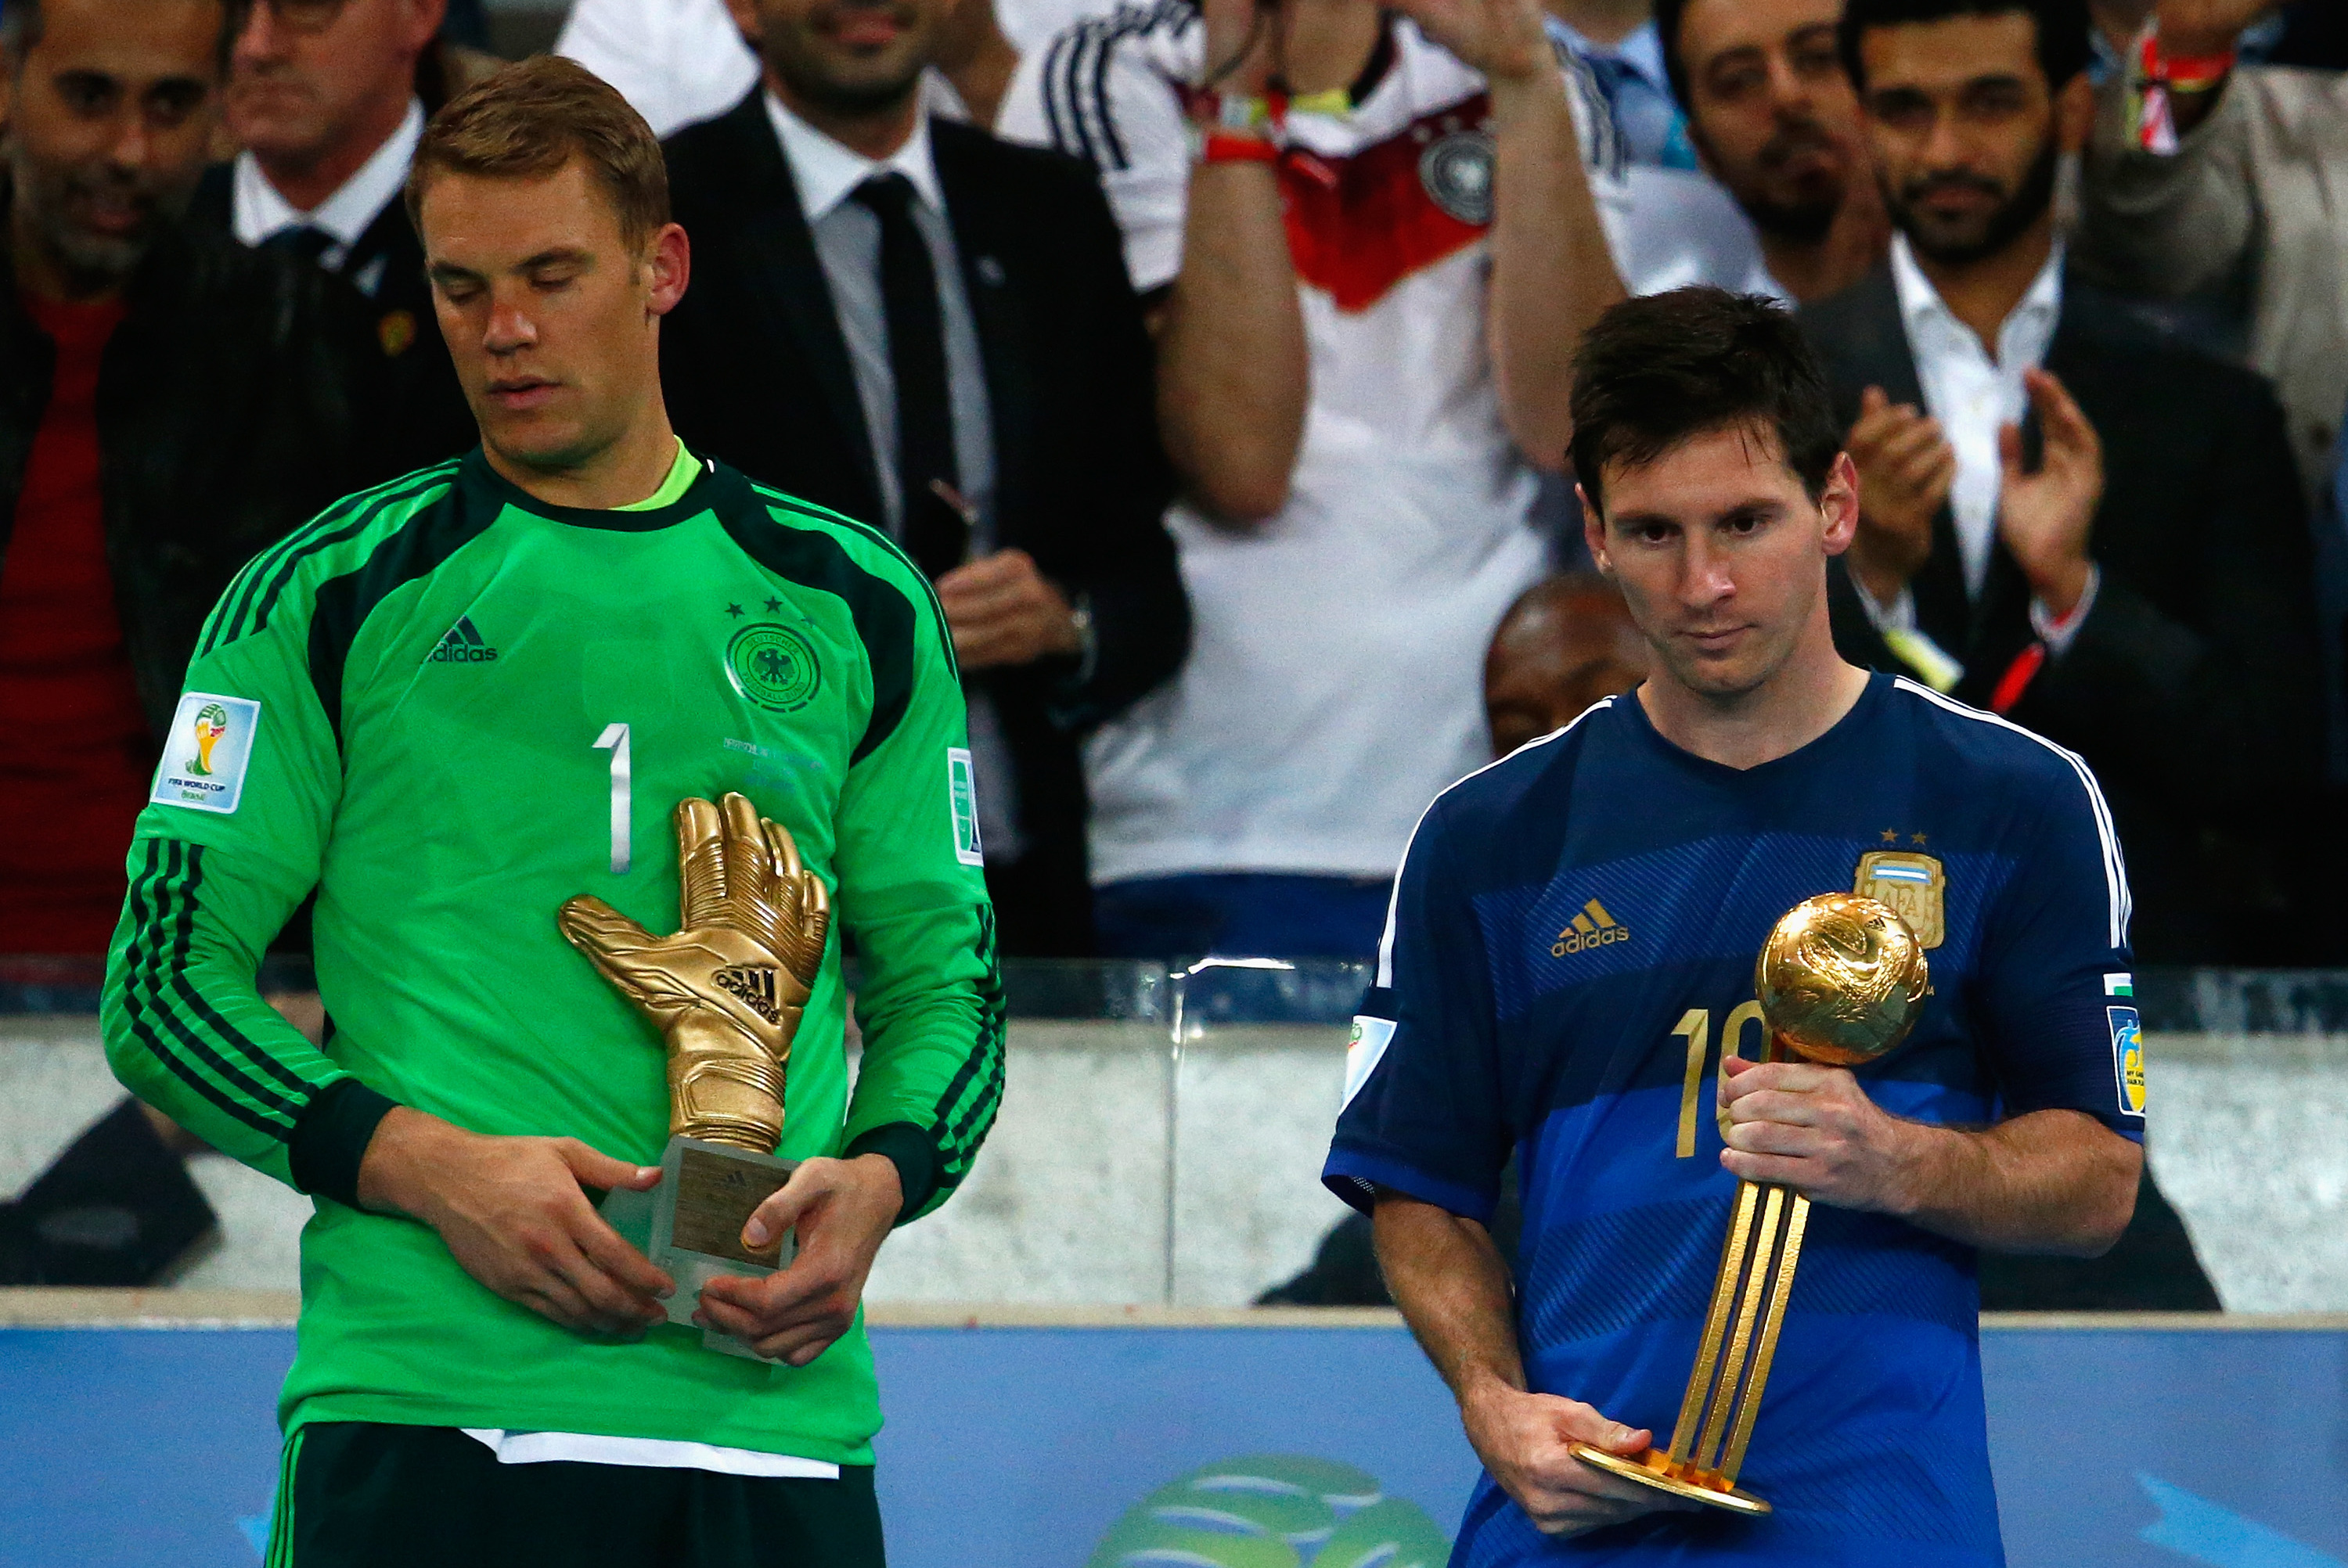 FIFA World Cup 2014 Awards: Winners, Recap and Twitter Reaction | Bleacher Report | Latest News, Videos and Highlights